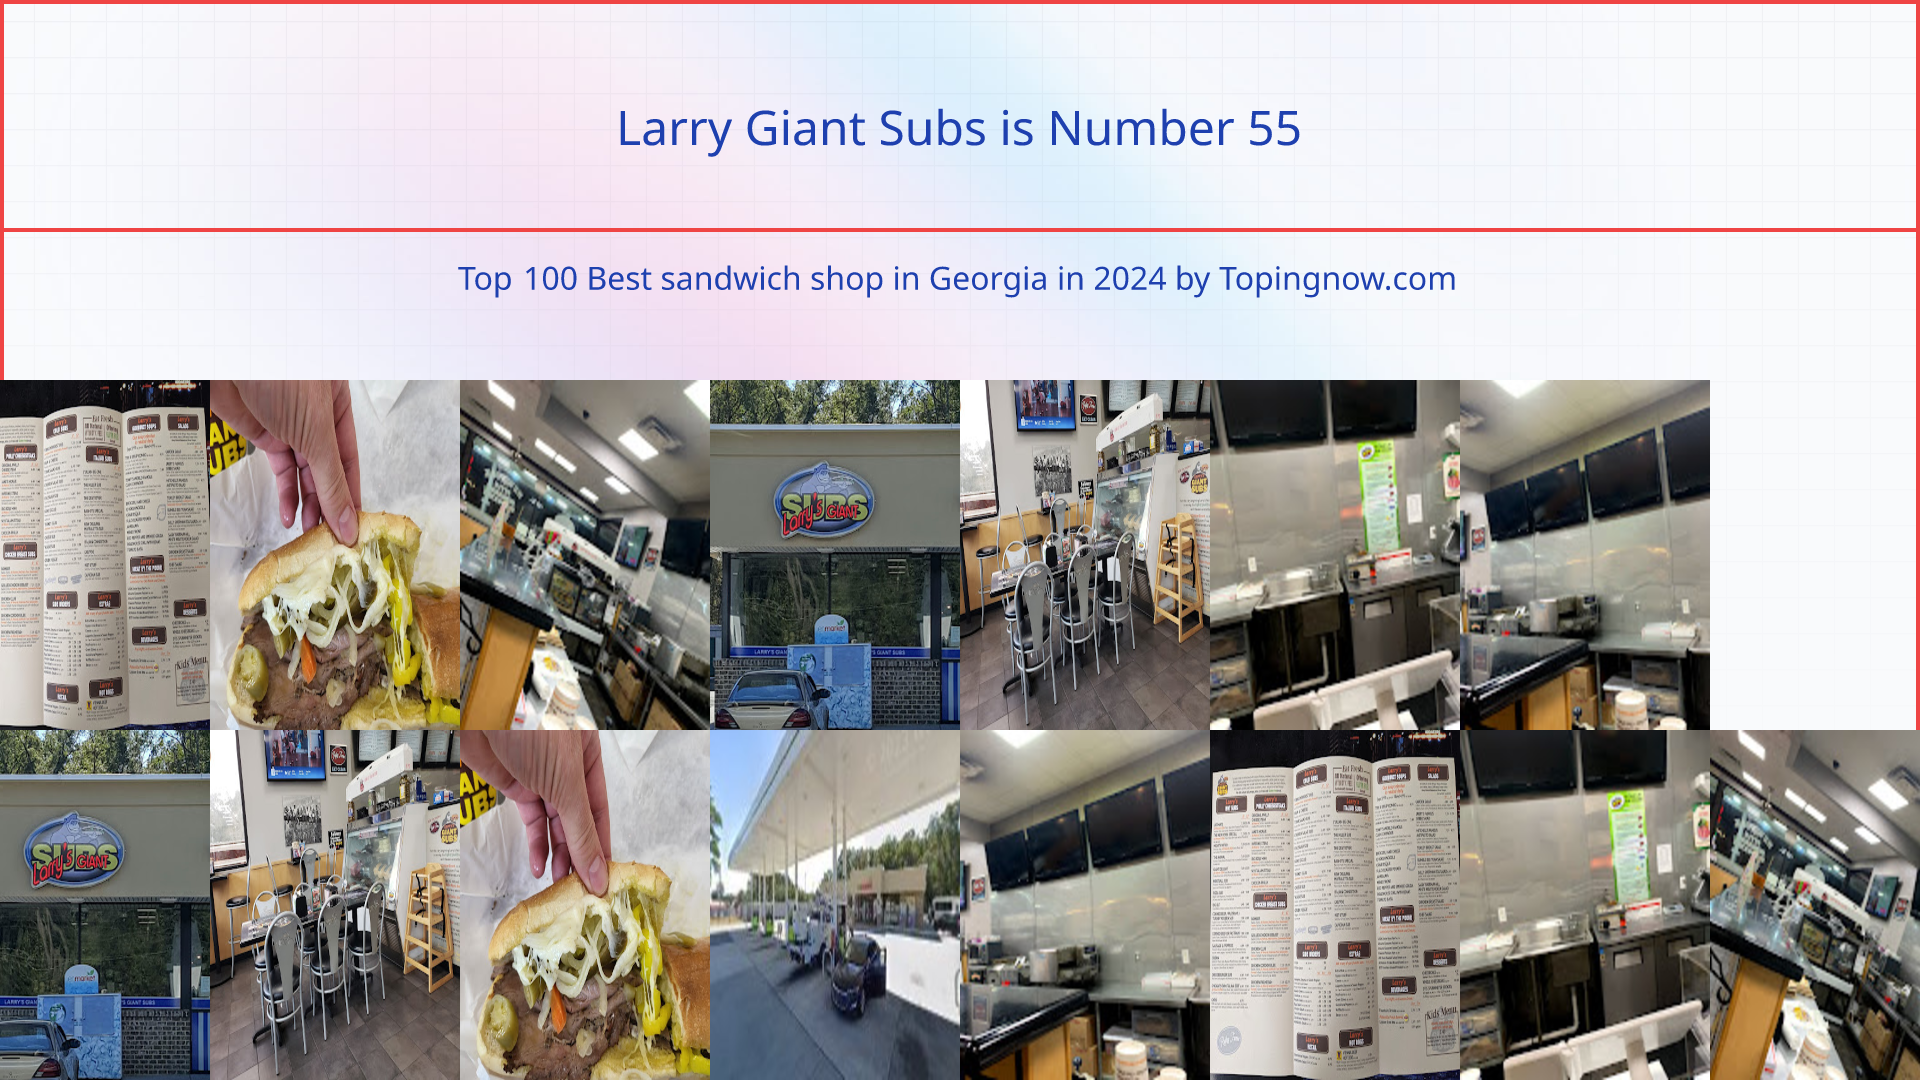 Larry Giant Subs: Top 100 Best sandwich shop in Georgia in 2024